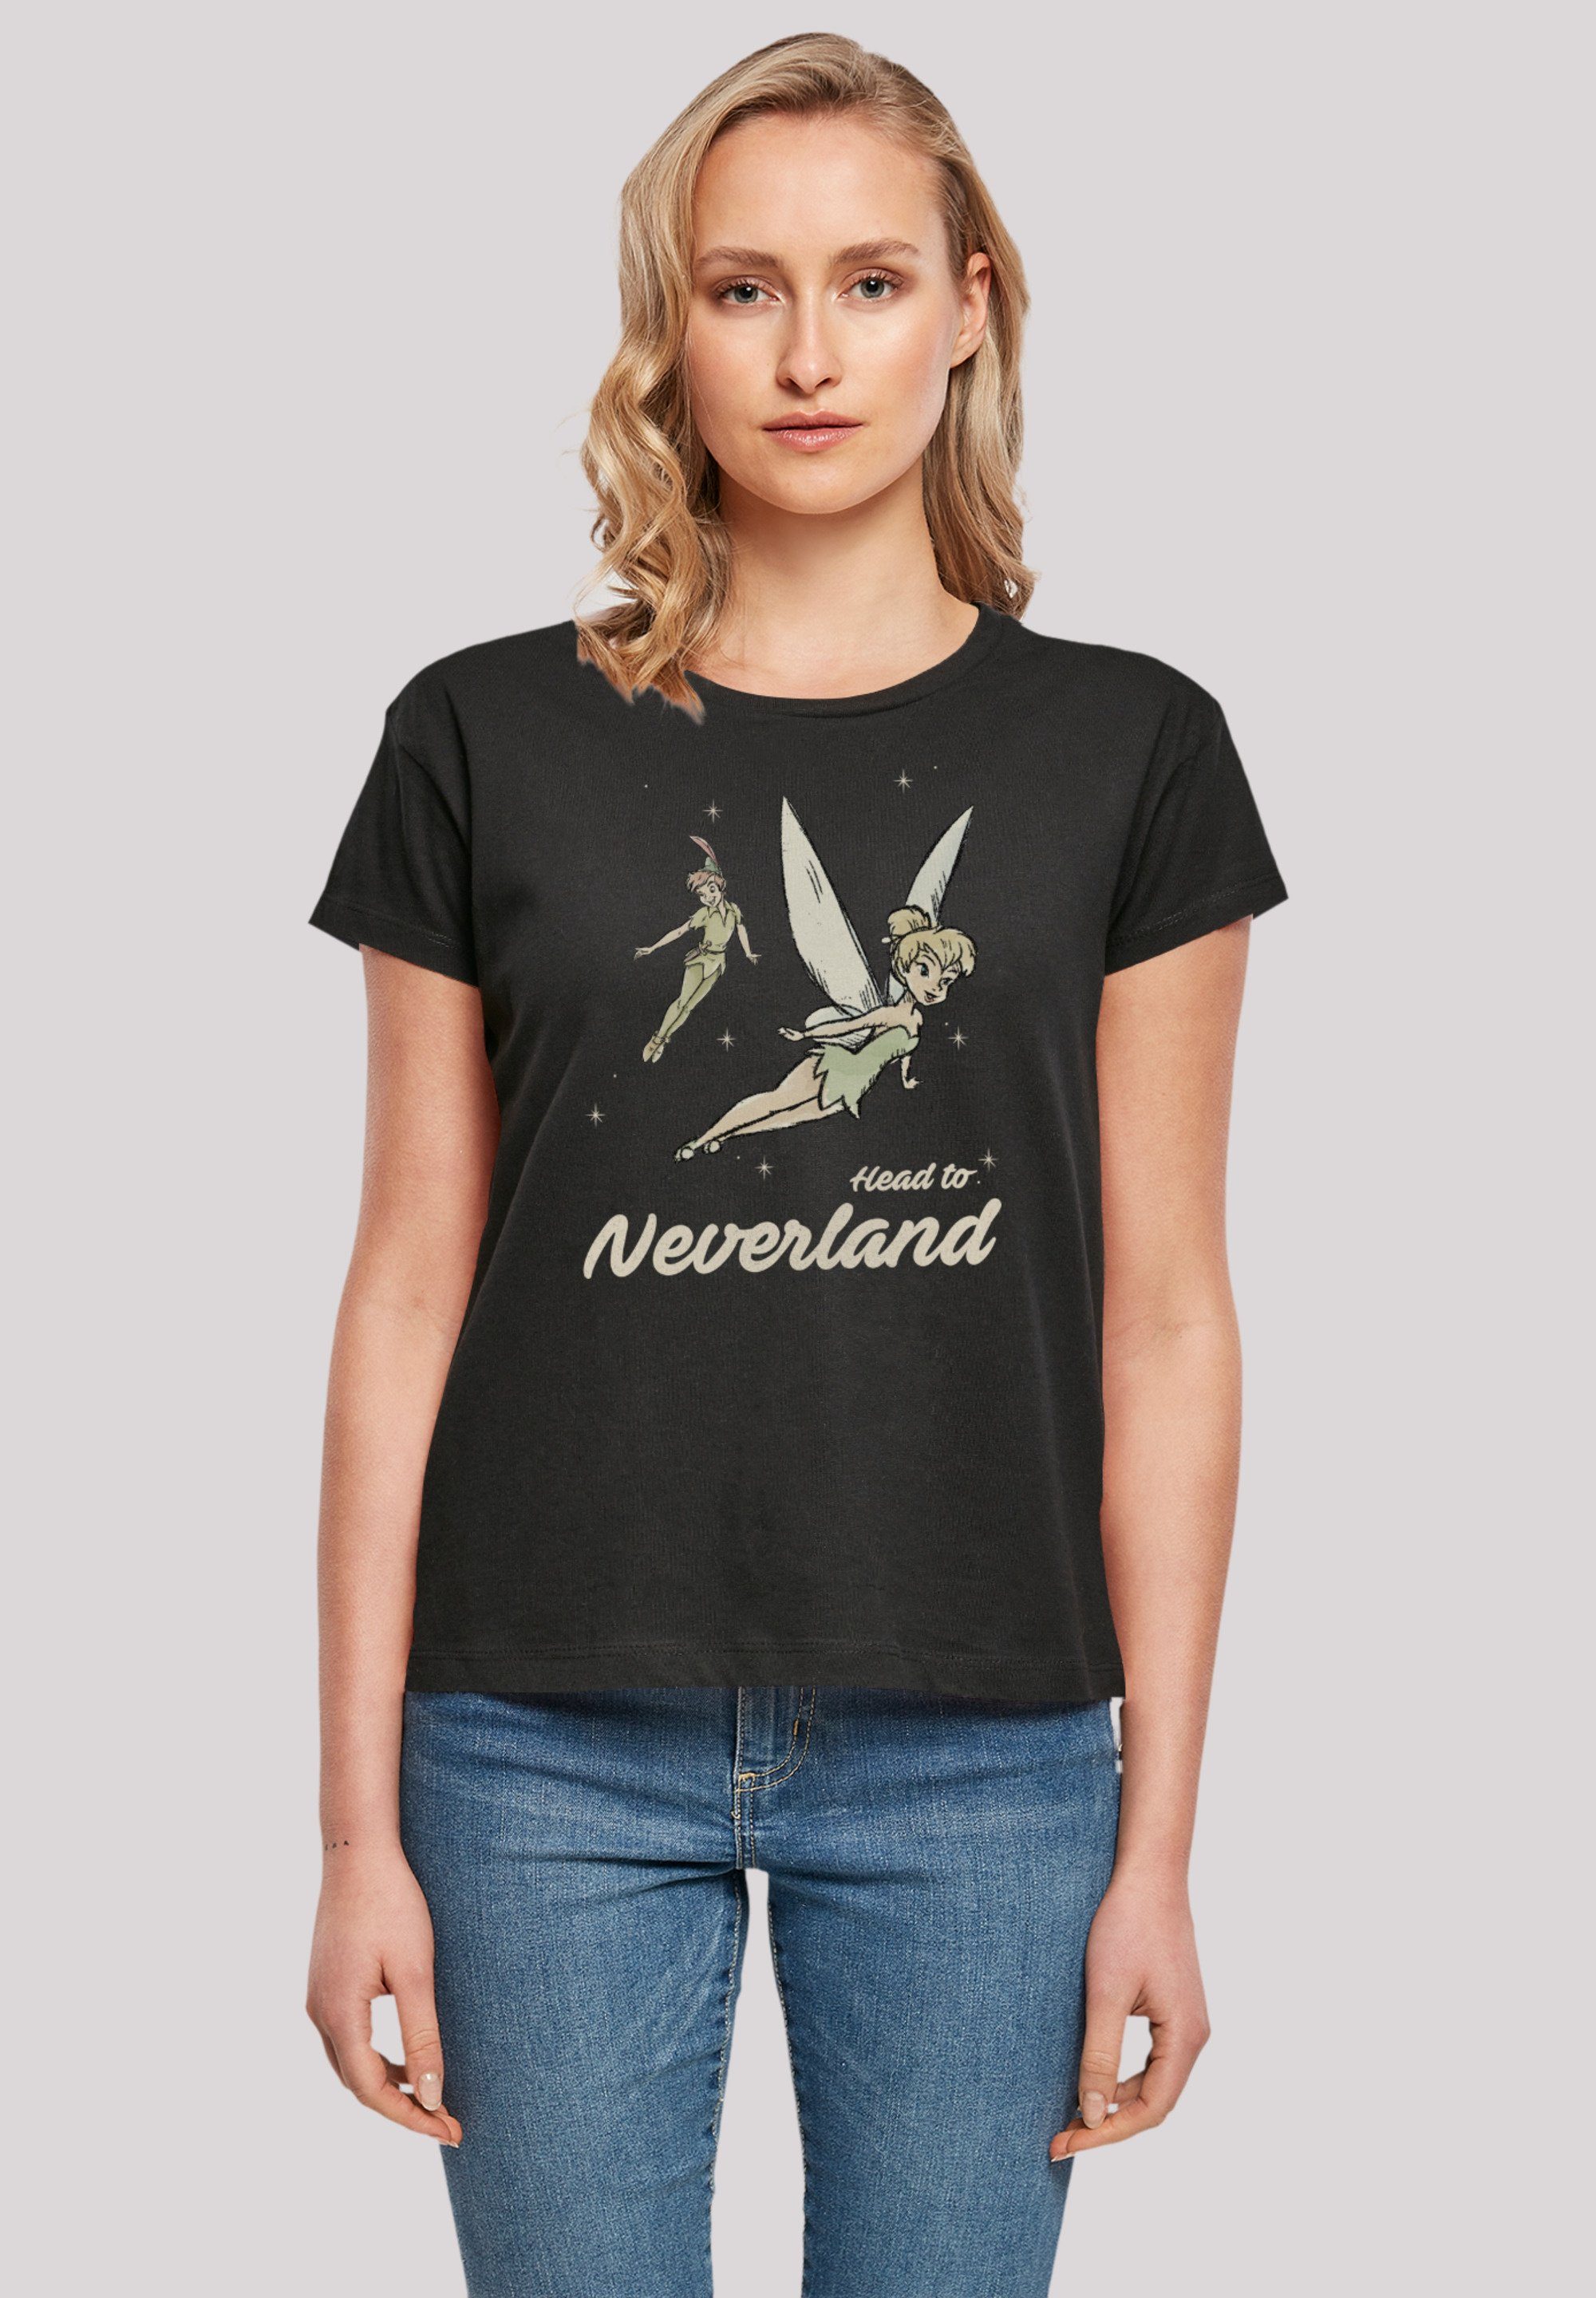 F4NT4STIC T-Shirt Disney Peter Pan Head To Neverland Premium Qualität